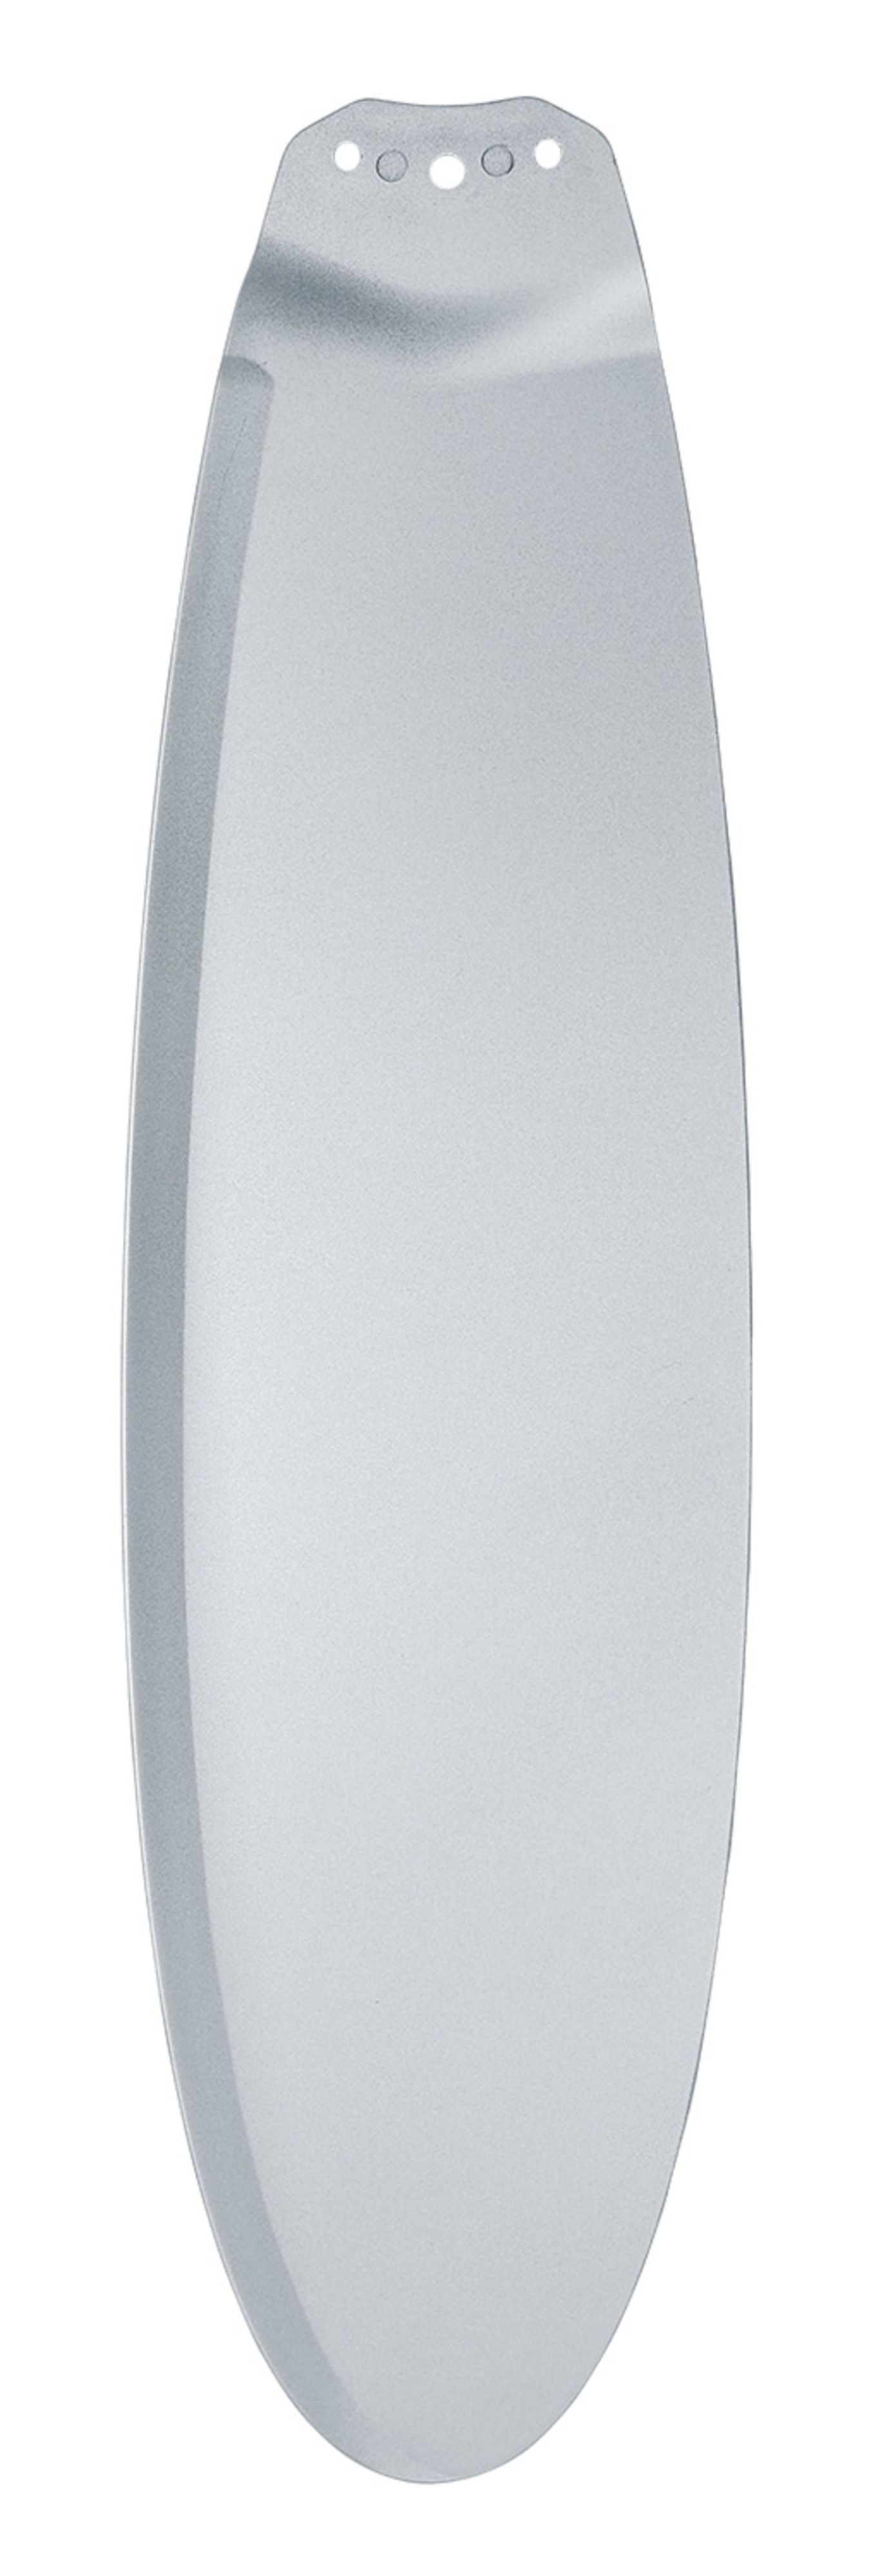 Eco / Grau LED (28 Deckenventilator Silber Plano CASAFAN II Watt)